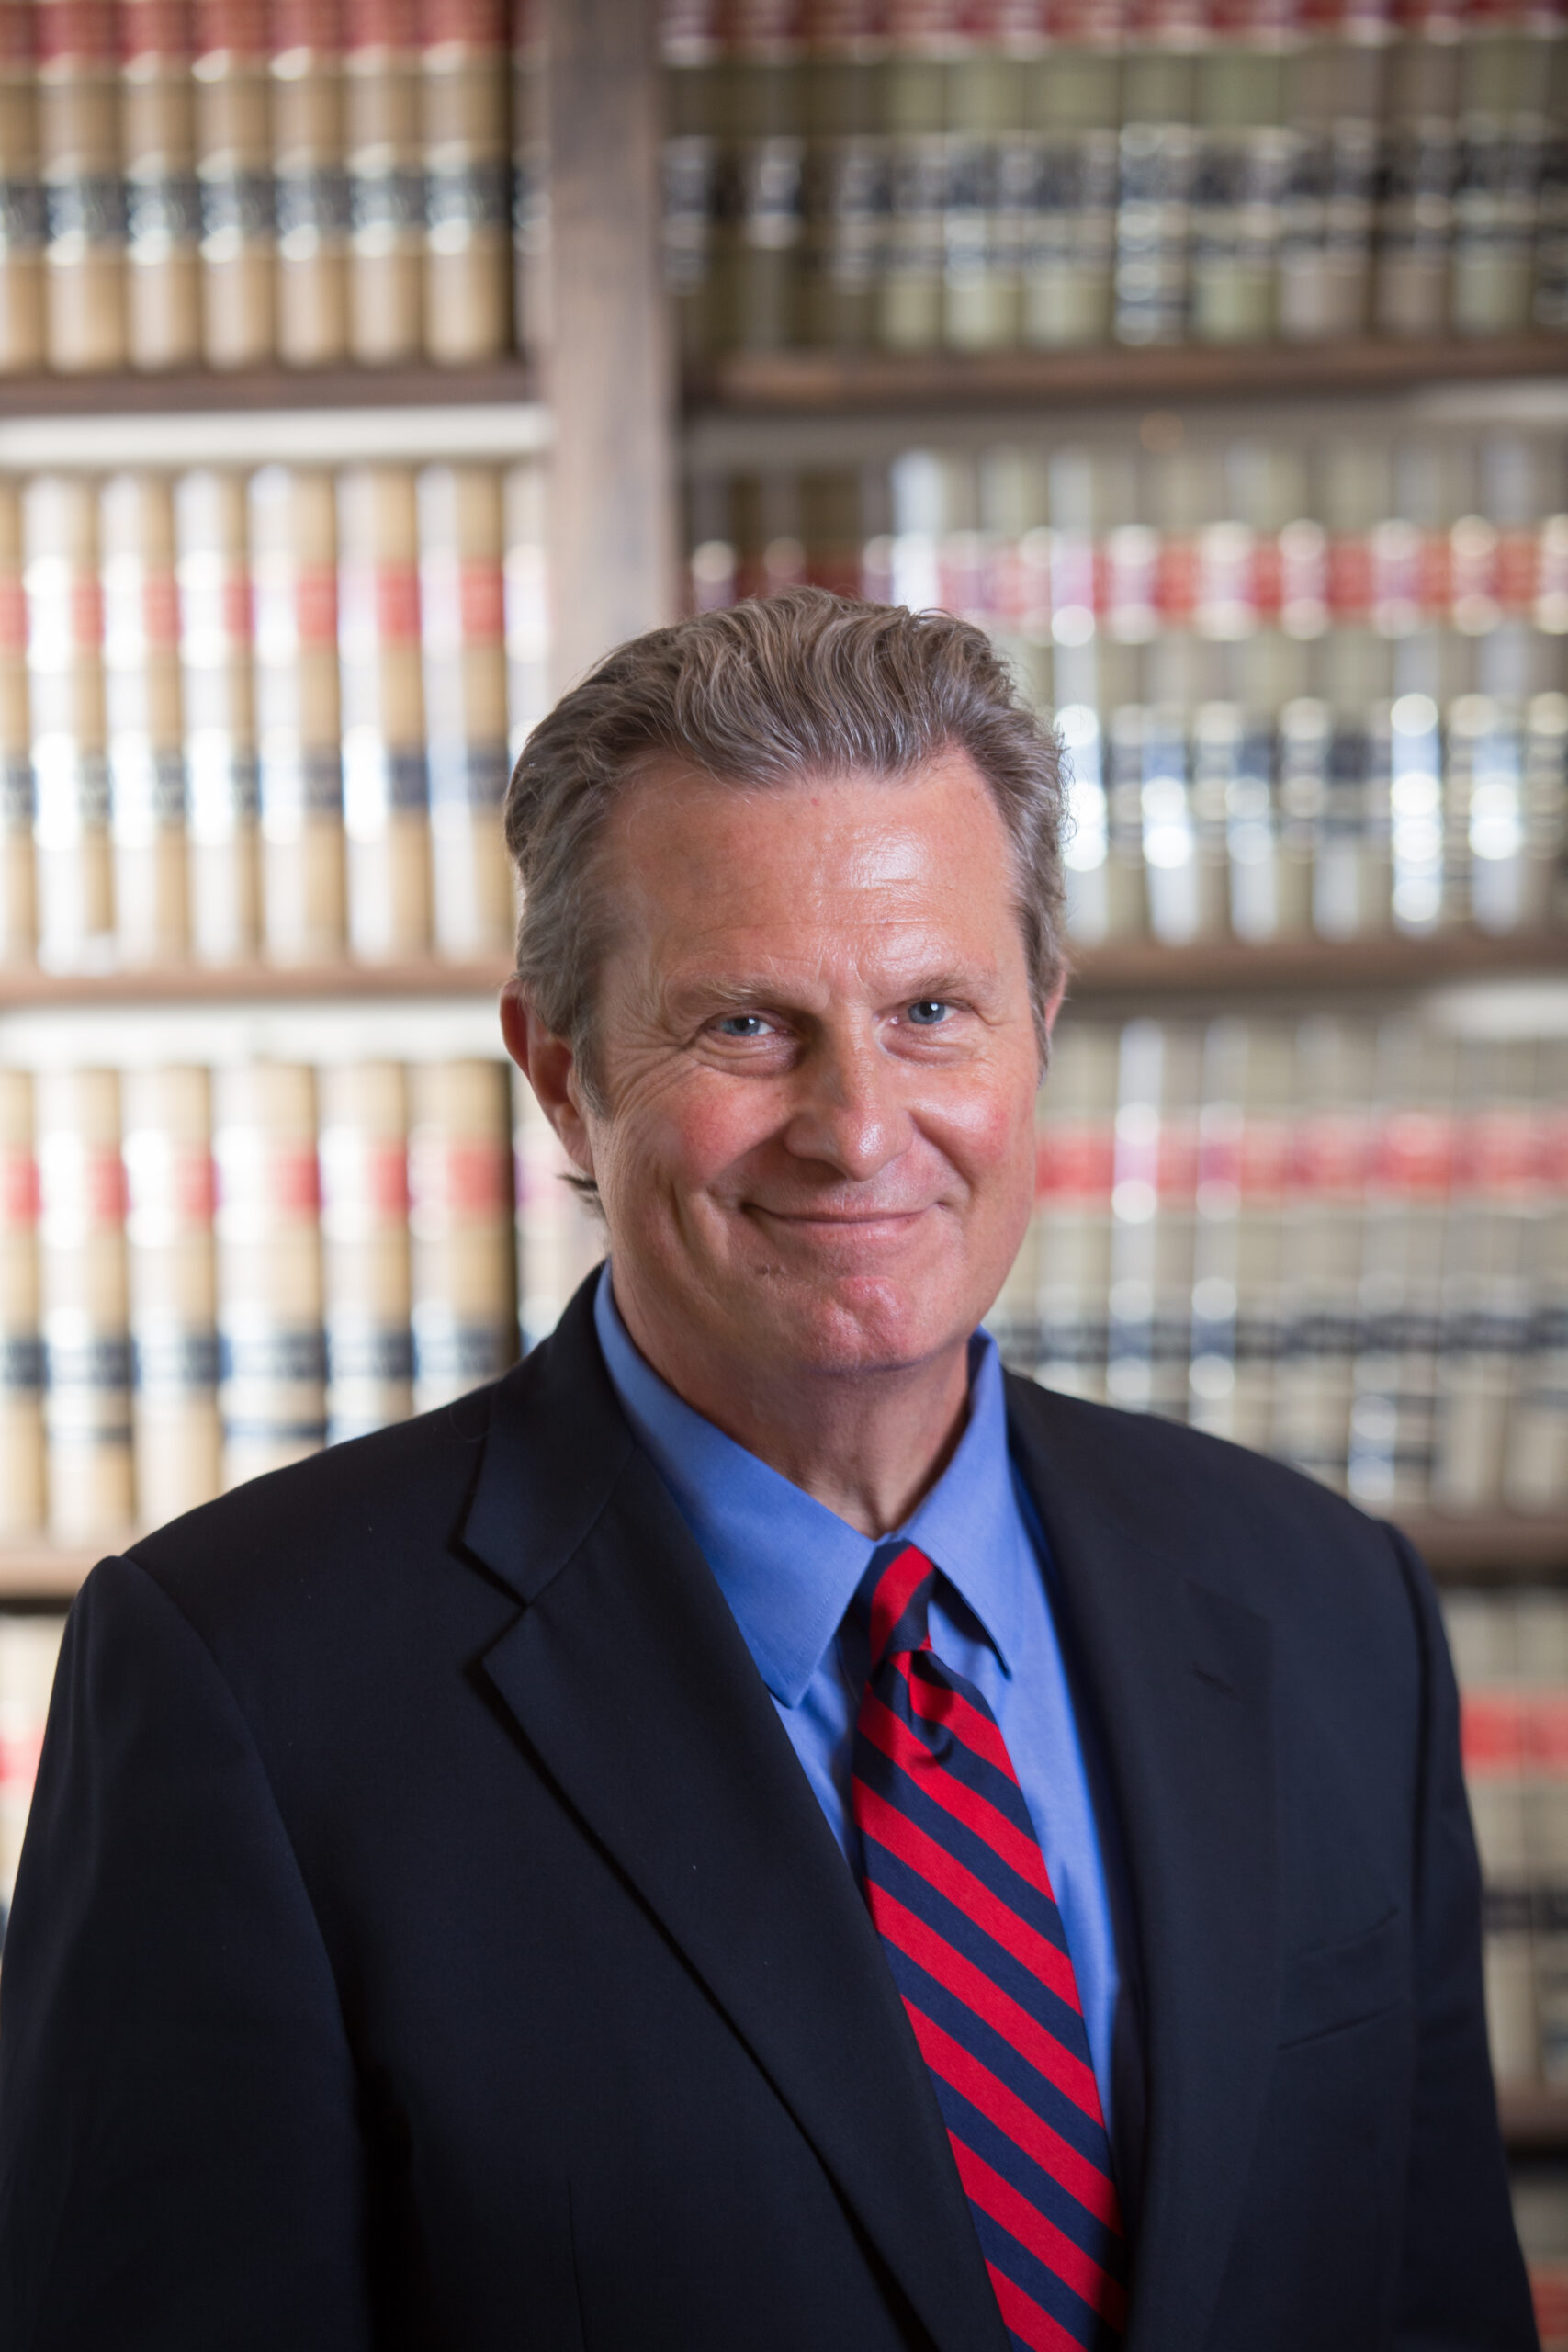 Richard M. Breen
Personal Injury Lawyer